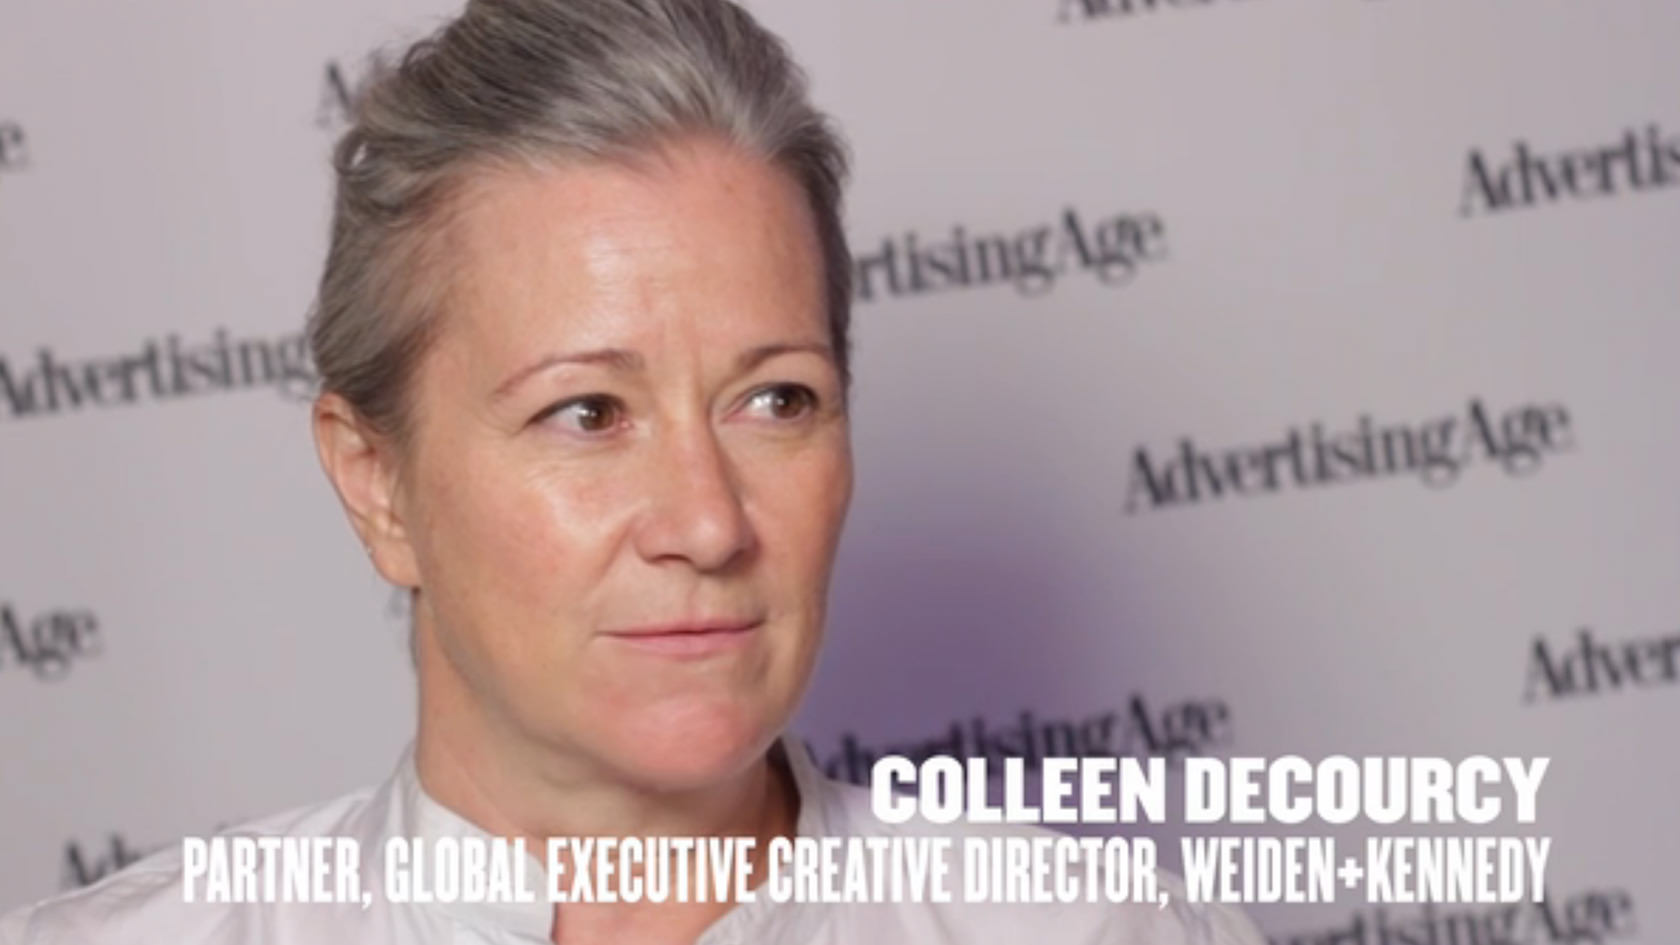 AdAge: Wieden+Kennedy’s Colleen DeCourcy on Independent agencies